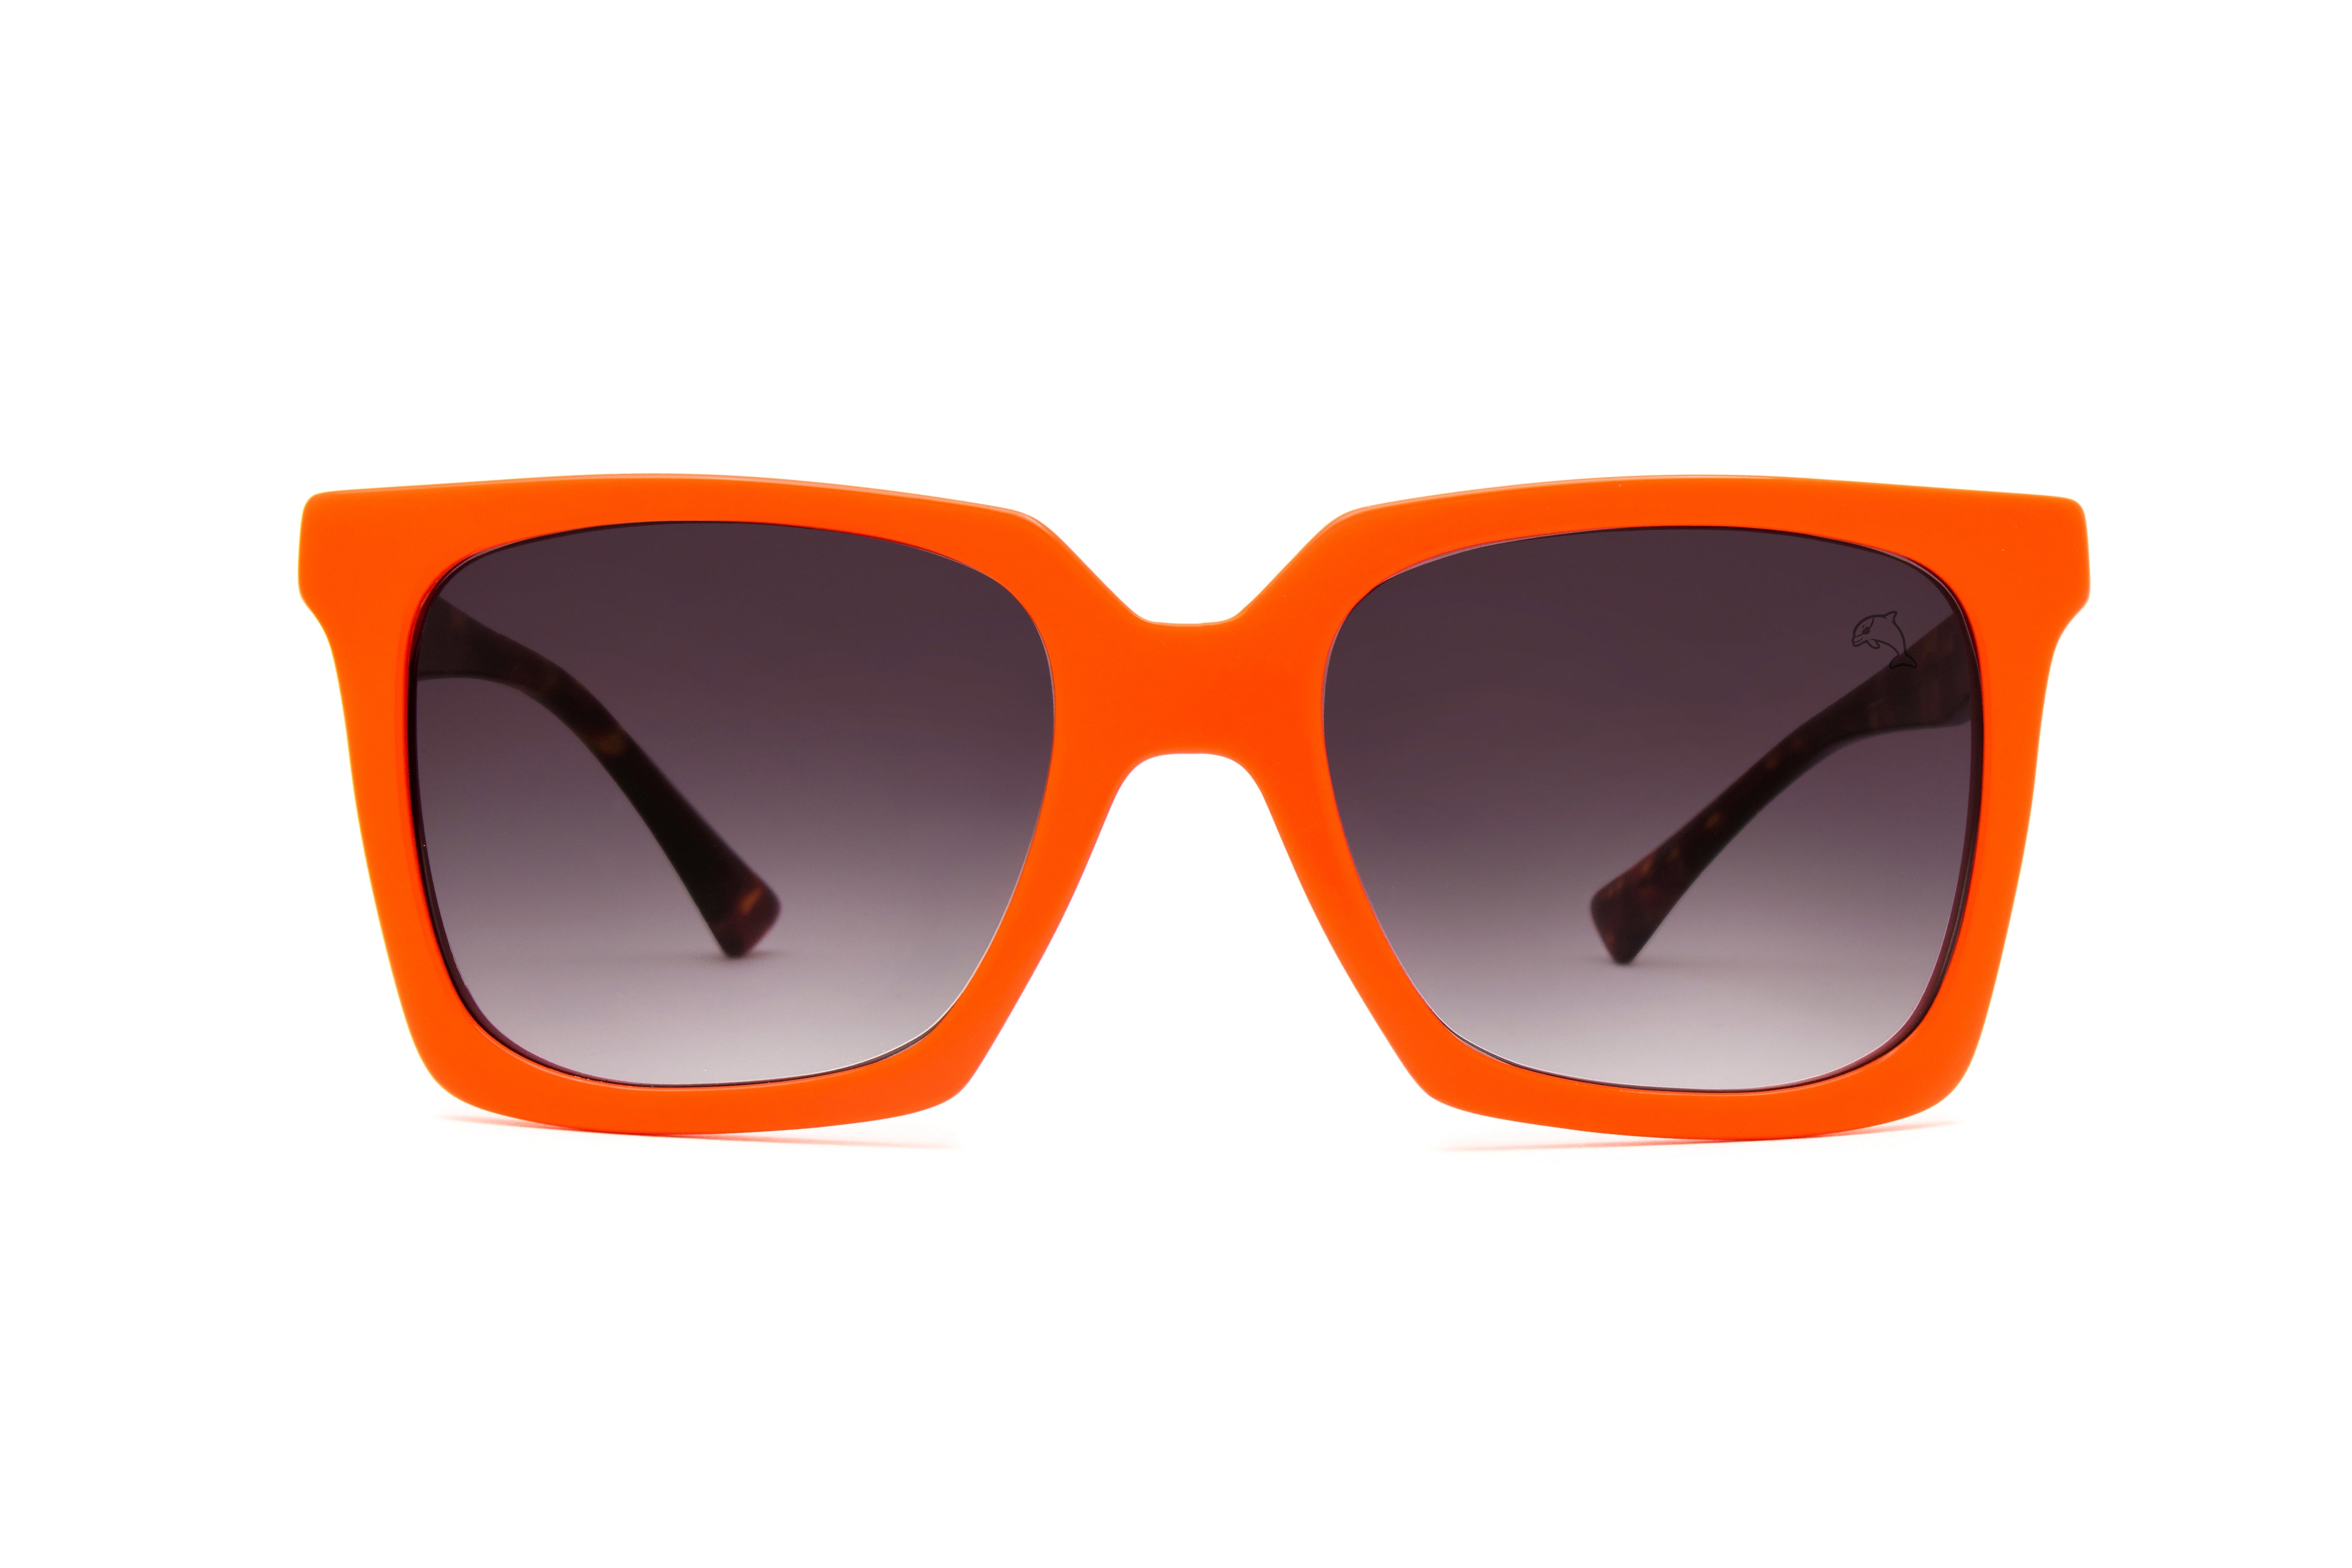 Biscayners Sunglasses |  Bill Bags Orange